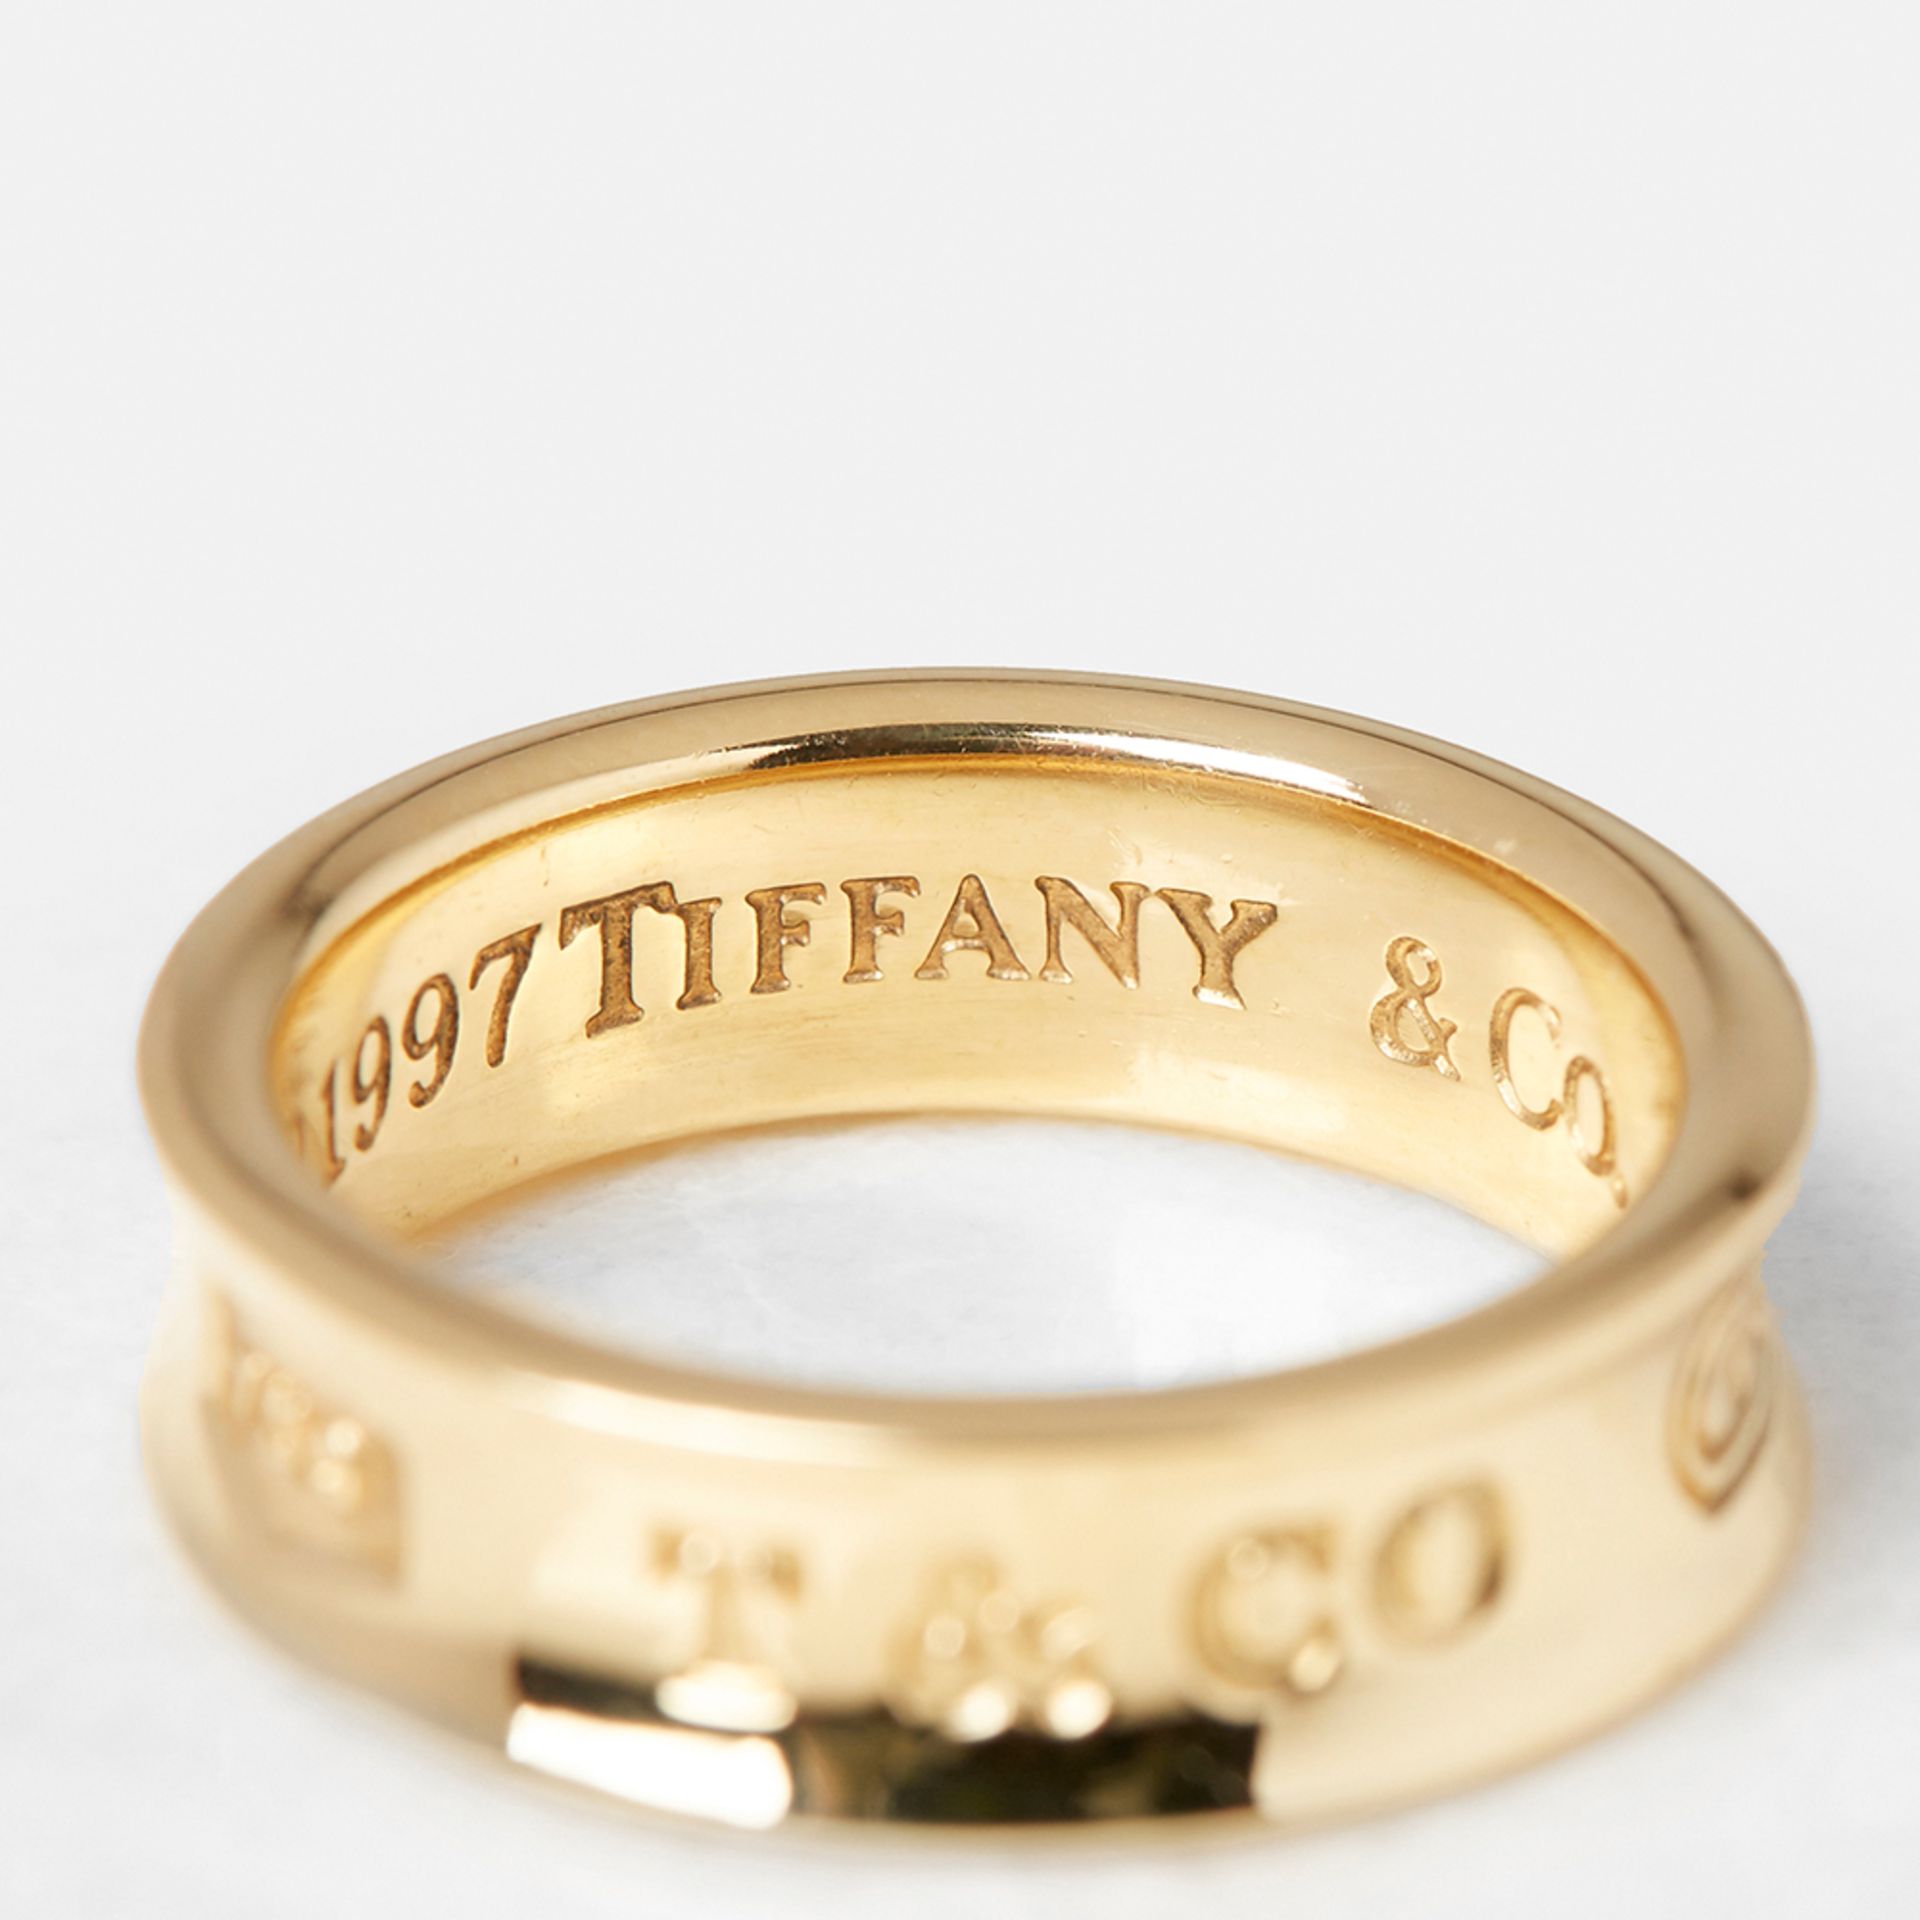 Tiffany & Co. 18k Yellow Gold Tiffany 1837 Ring - Image 7 of 8